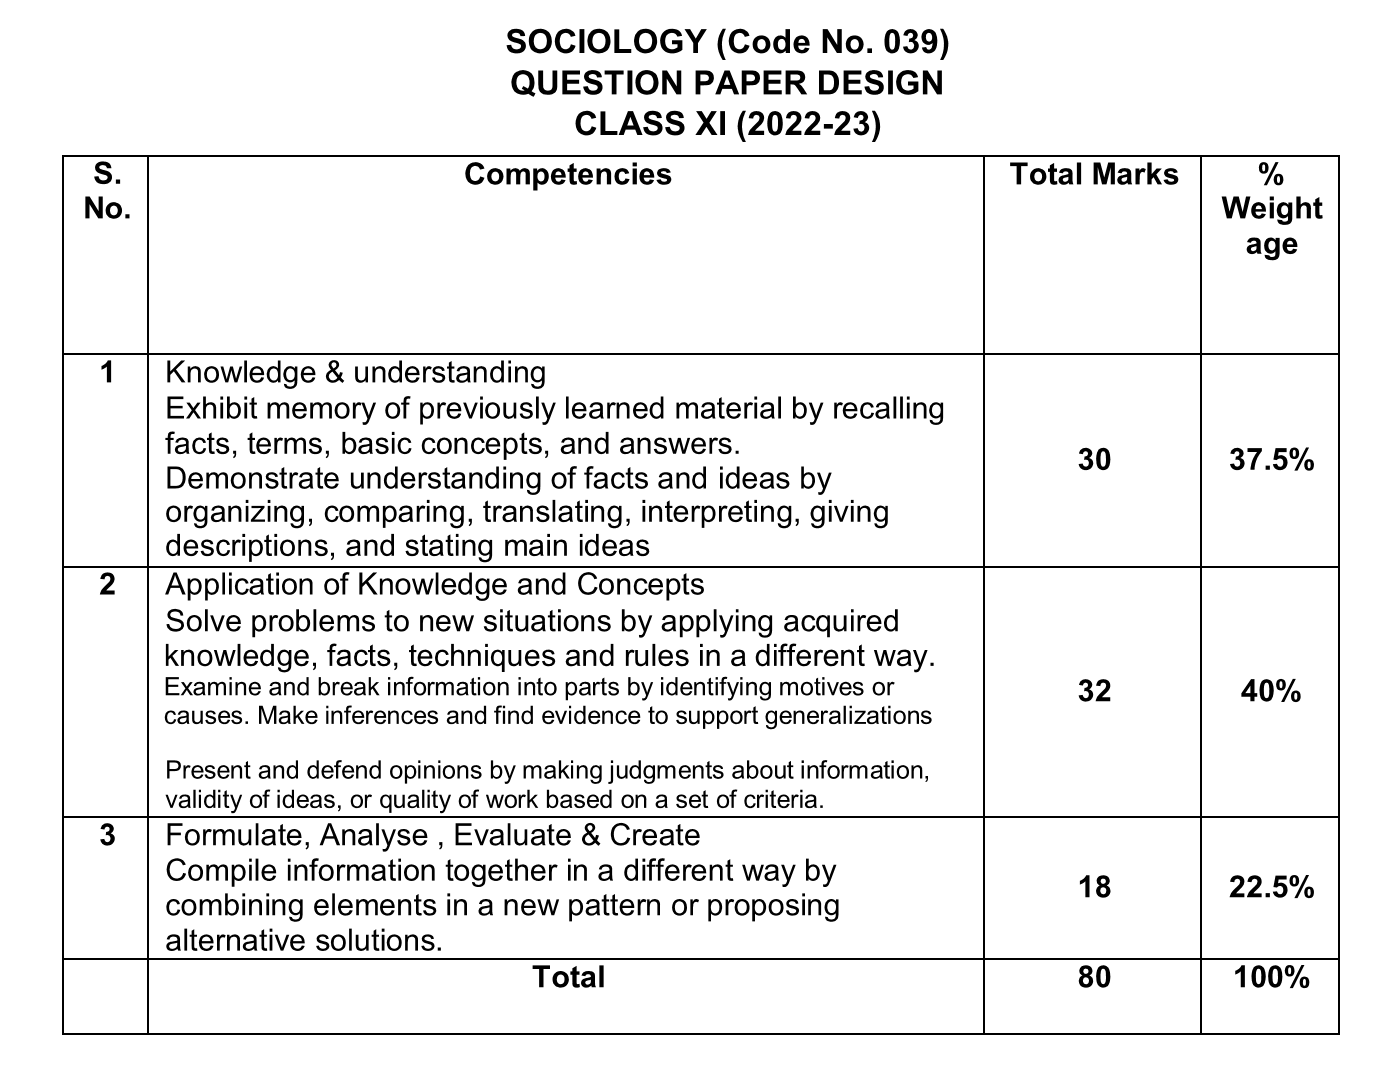 CBSE Class 11 Sociology Term 2 Syllabus 2022-23